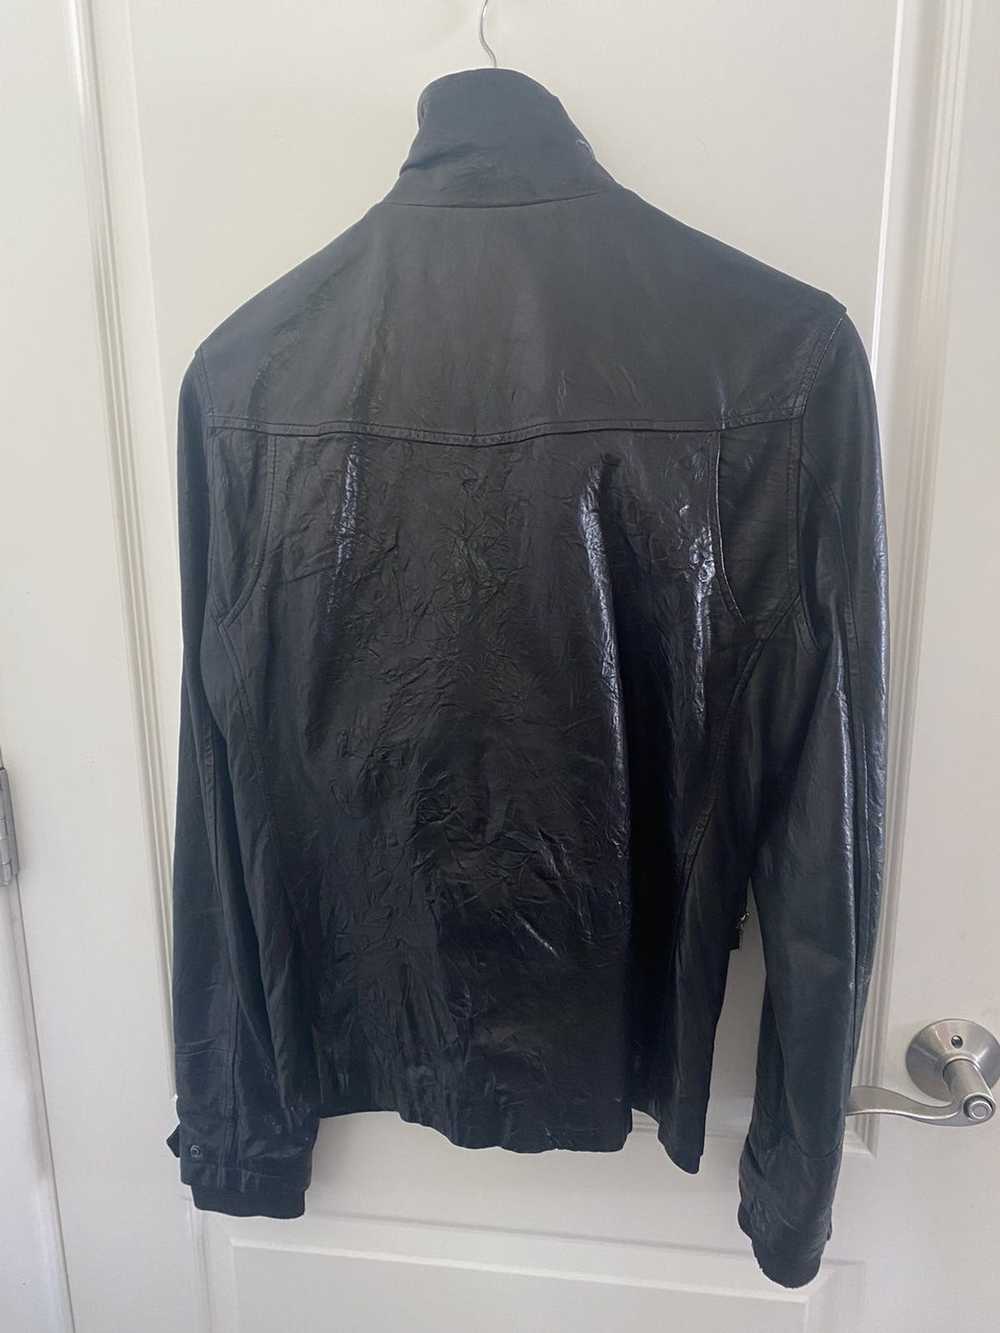 Japanese Brand Trick or Treat Black Leather Jacket - image 4